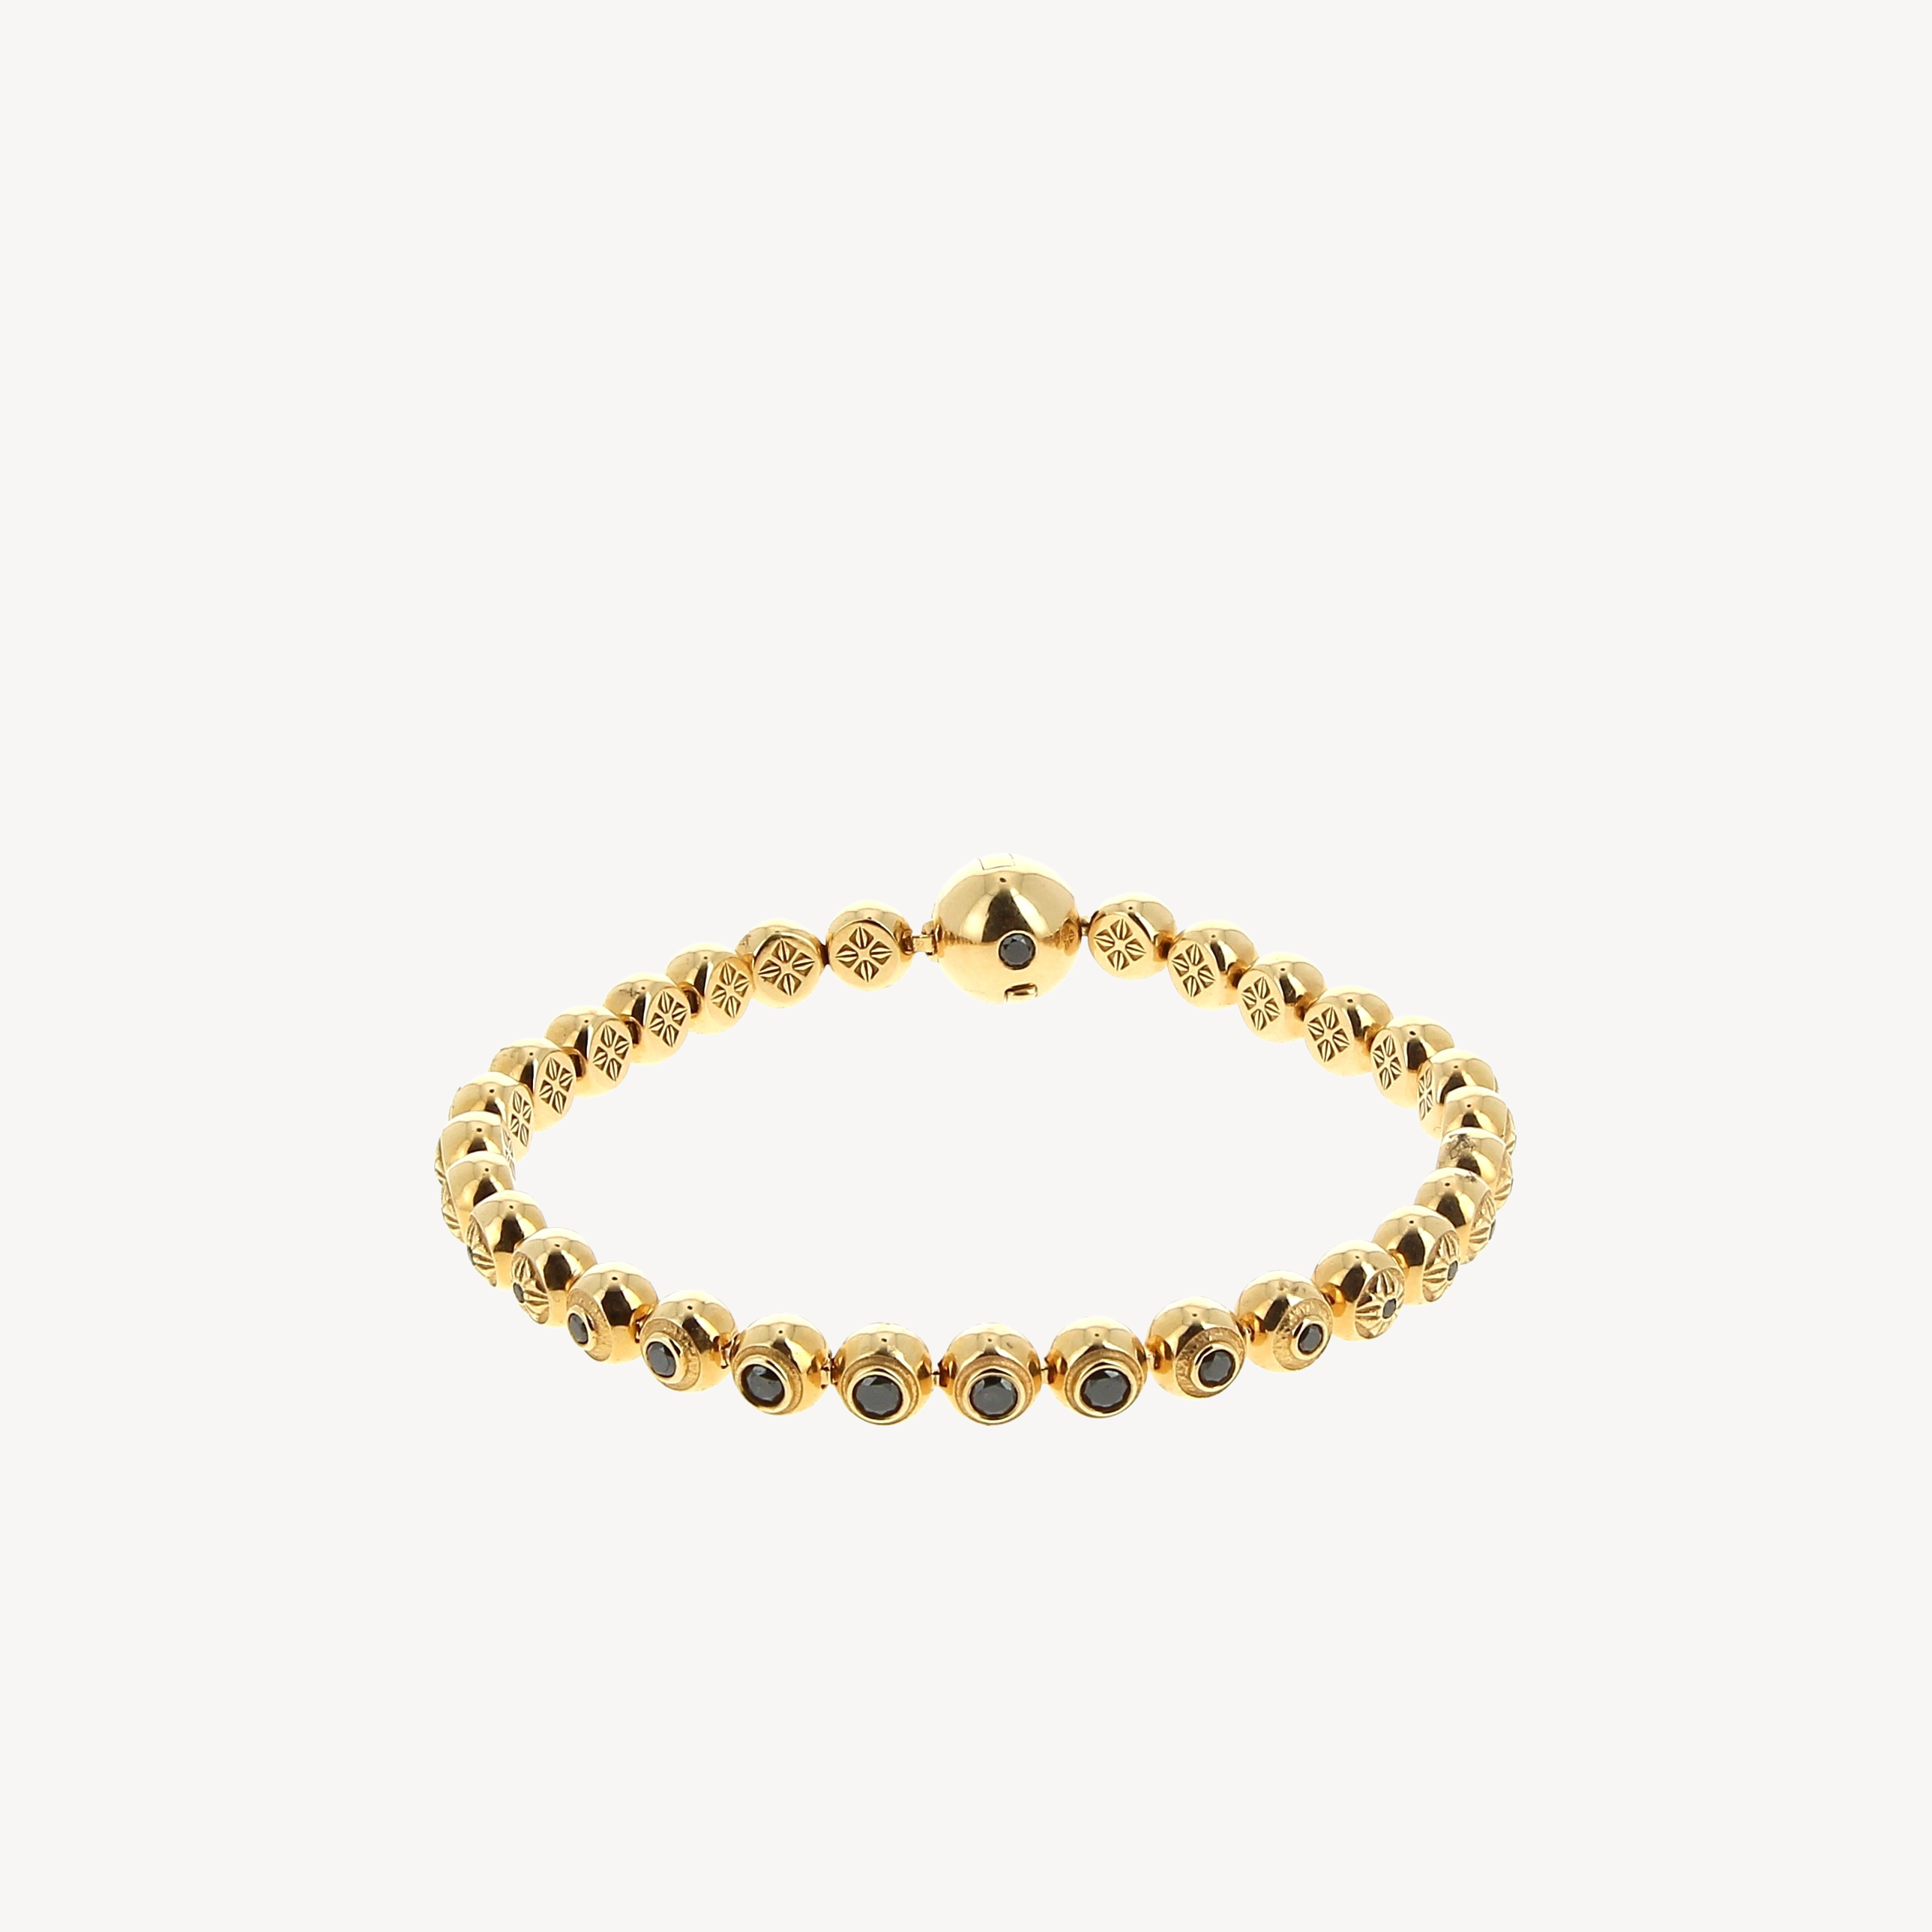 Rose gold and black diamond bracelet